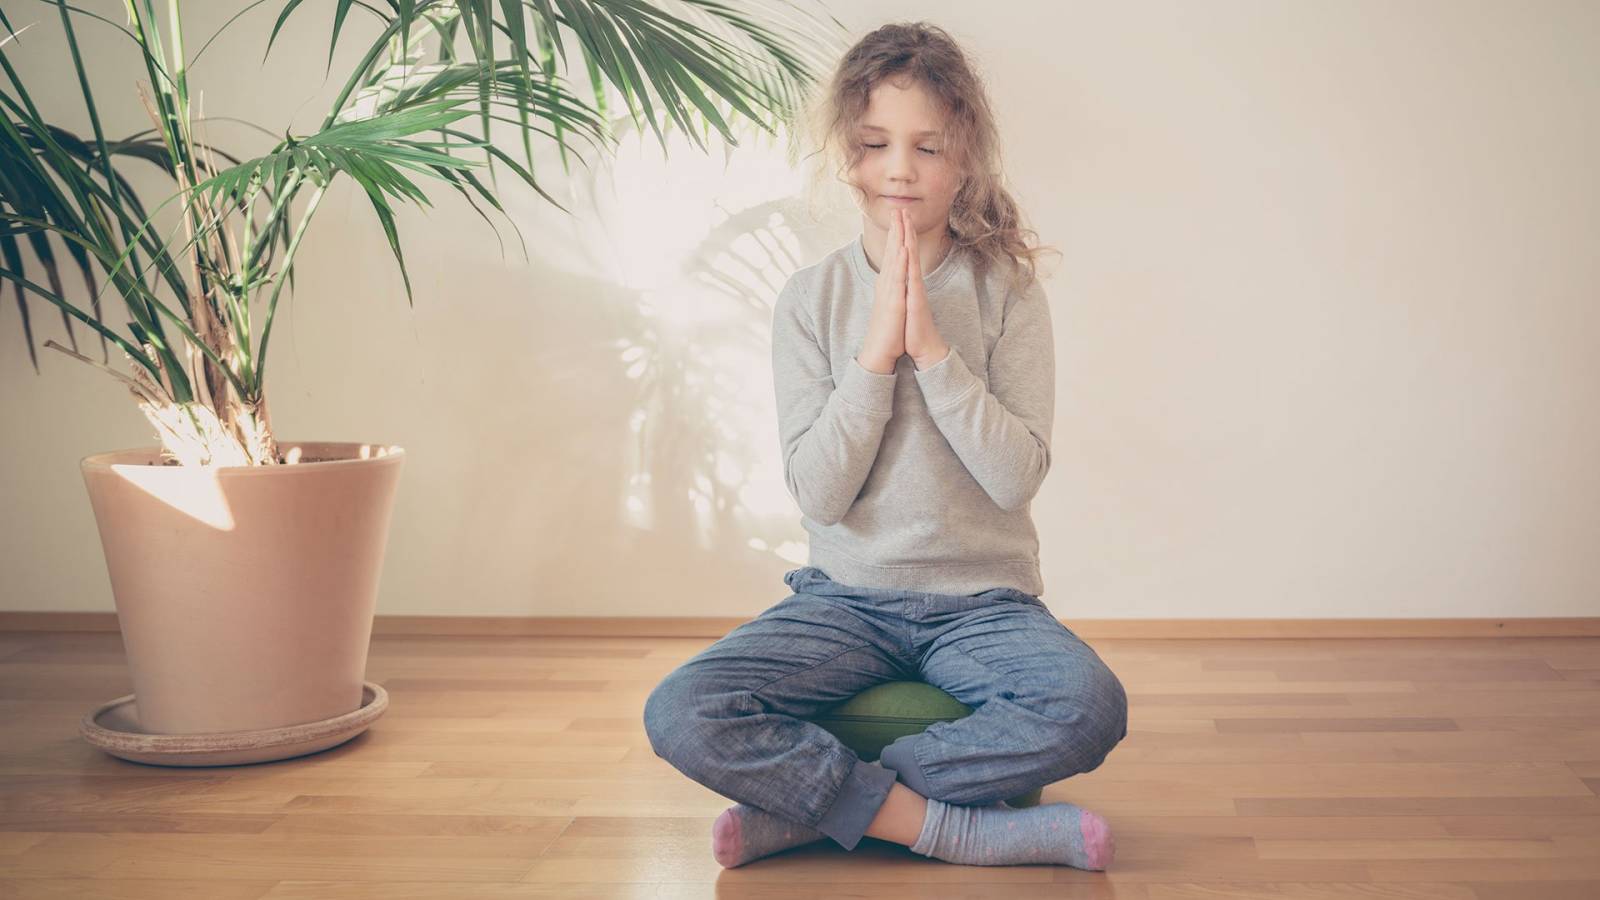 Yoga Generates Huge Benefits For Children With Autism